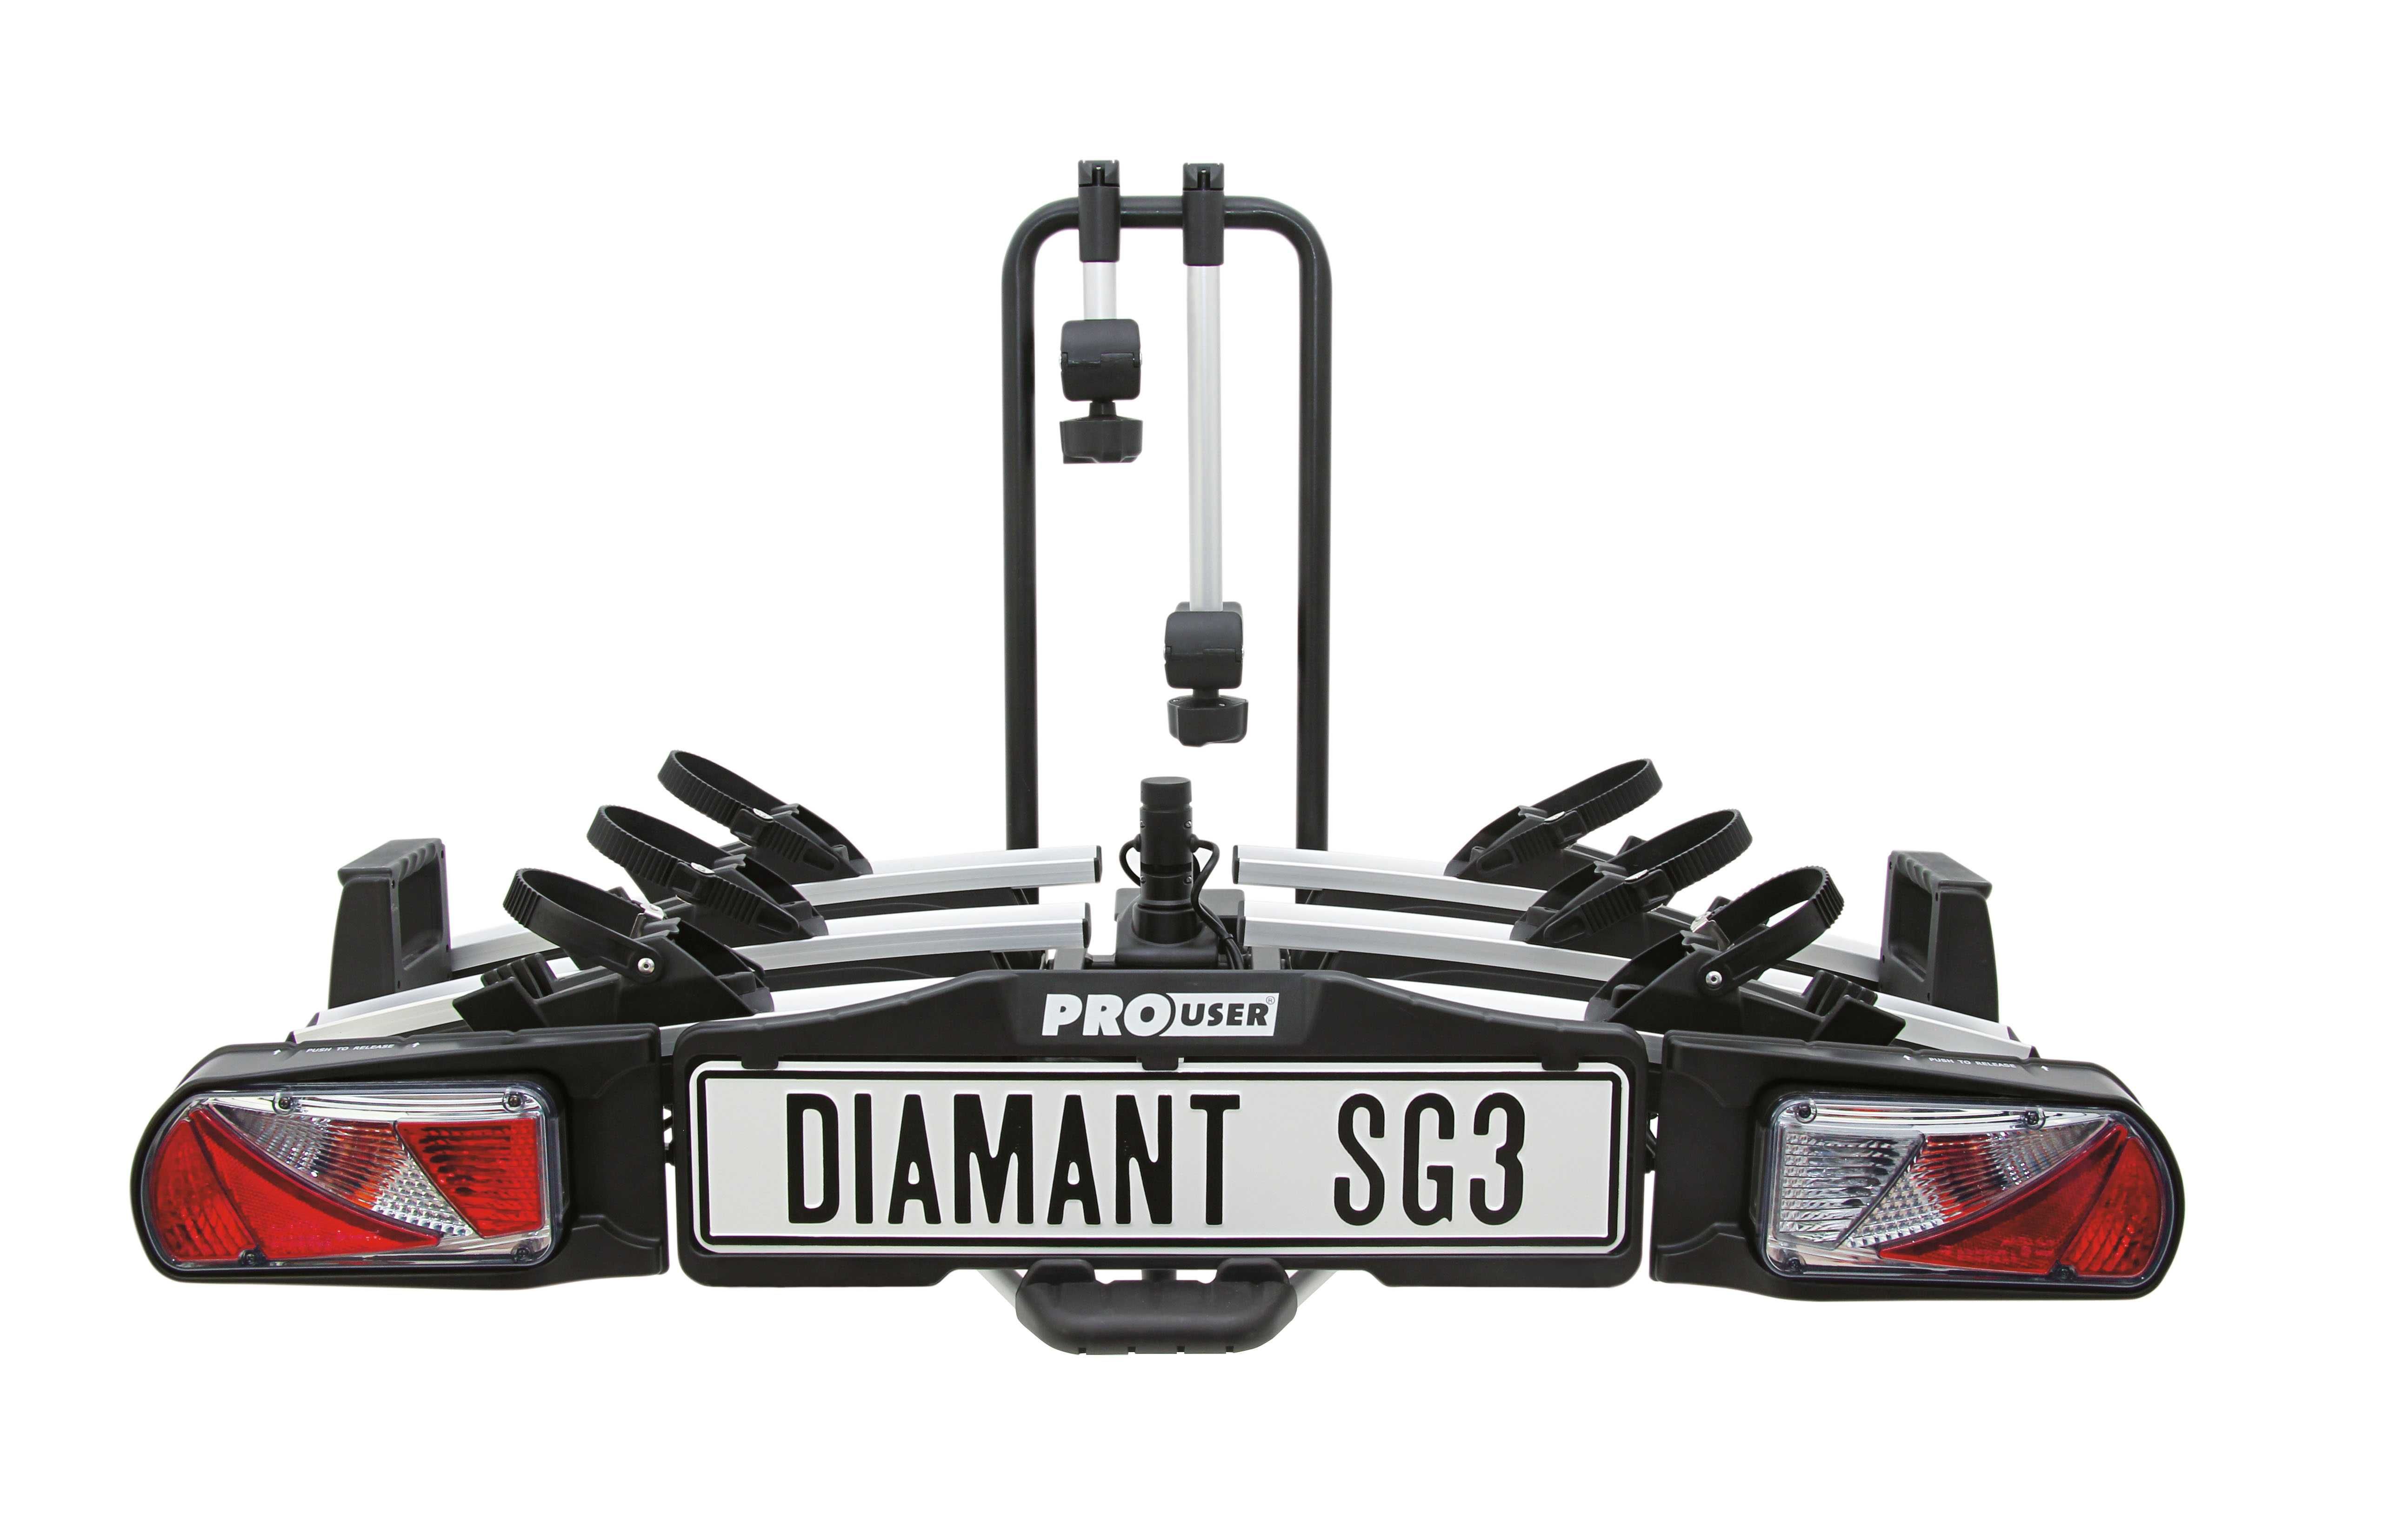 Platforma rowerowa na hak na 3 rowery PROUSER Diamant SG3 składana